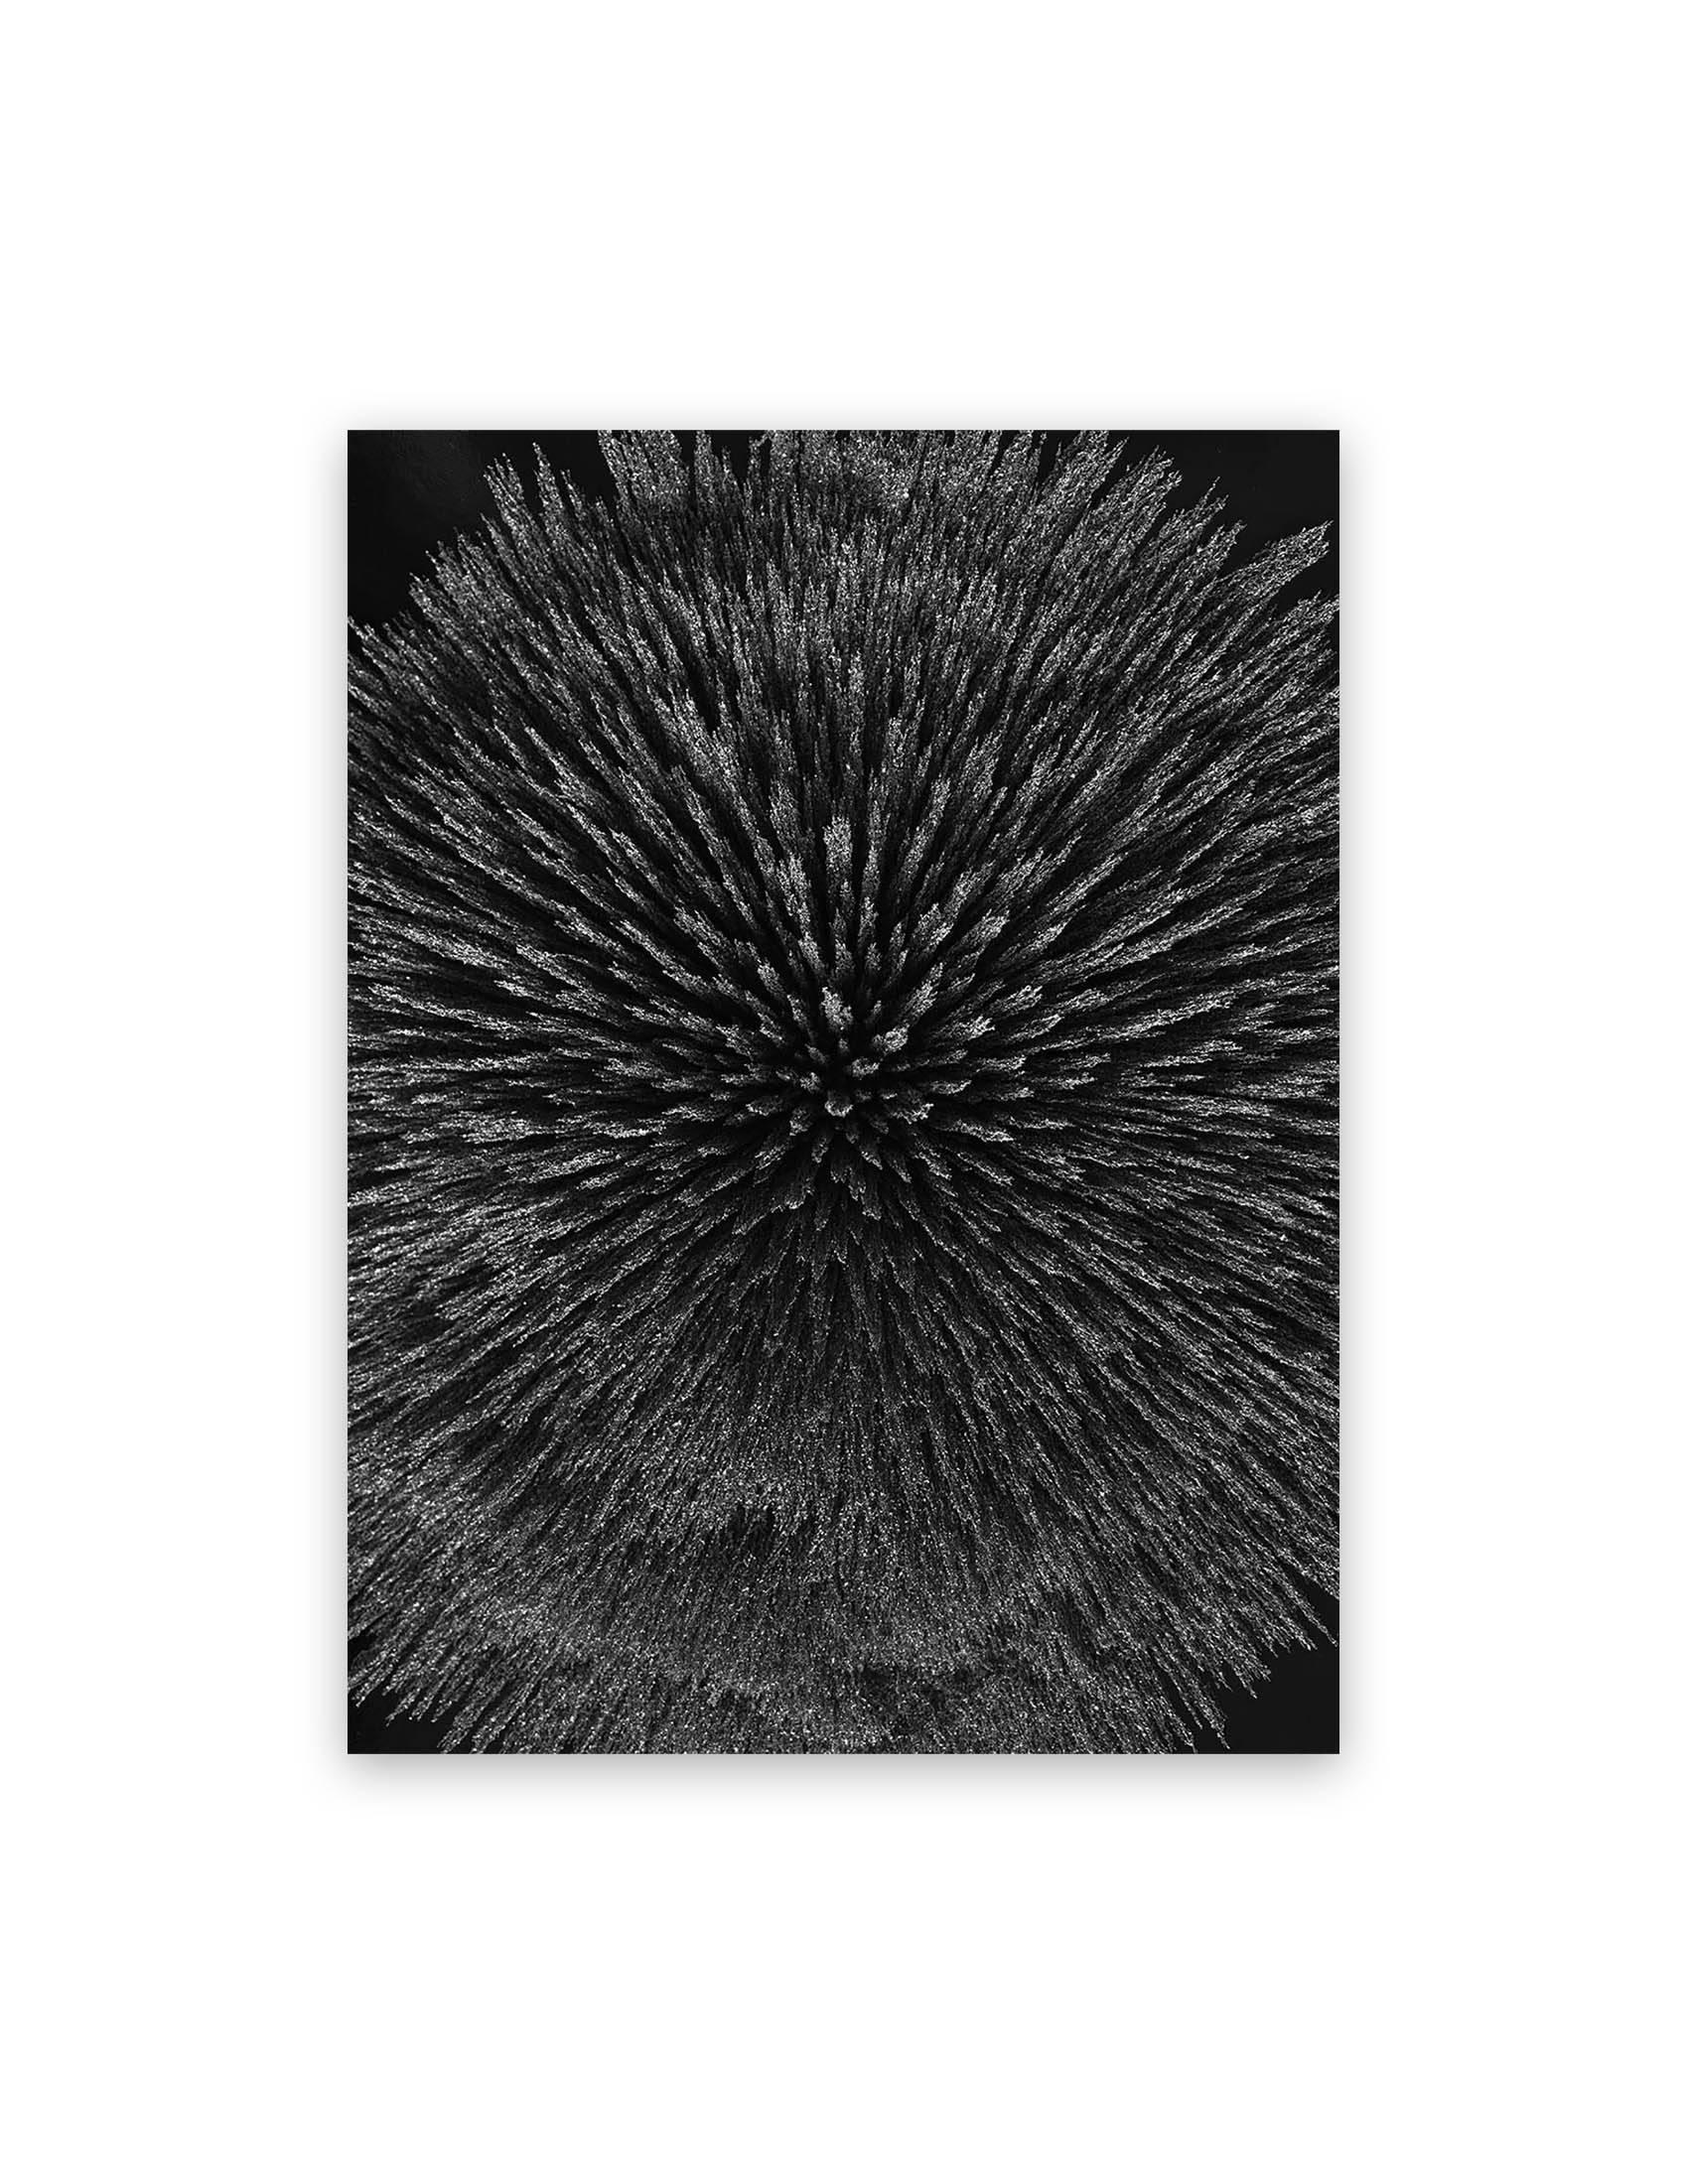 Seb Janiak Black and White Photograph - Magnetic radiation 99 (Medium)